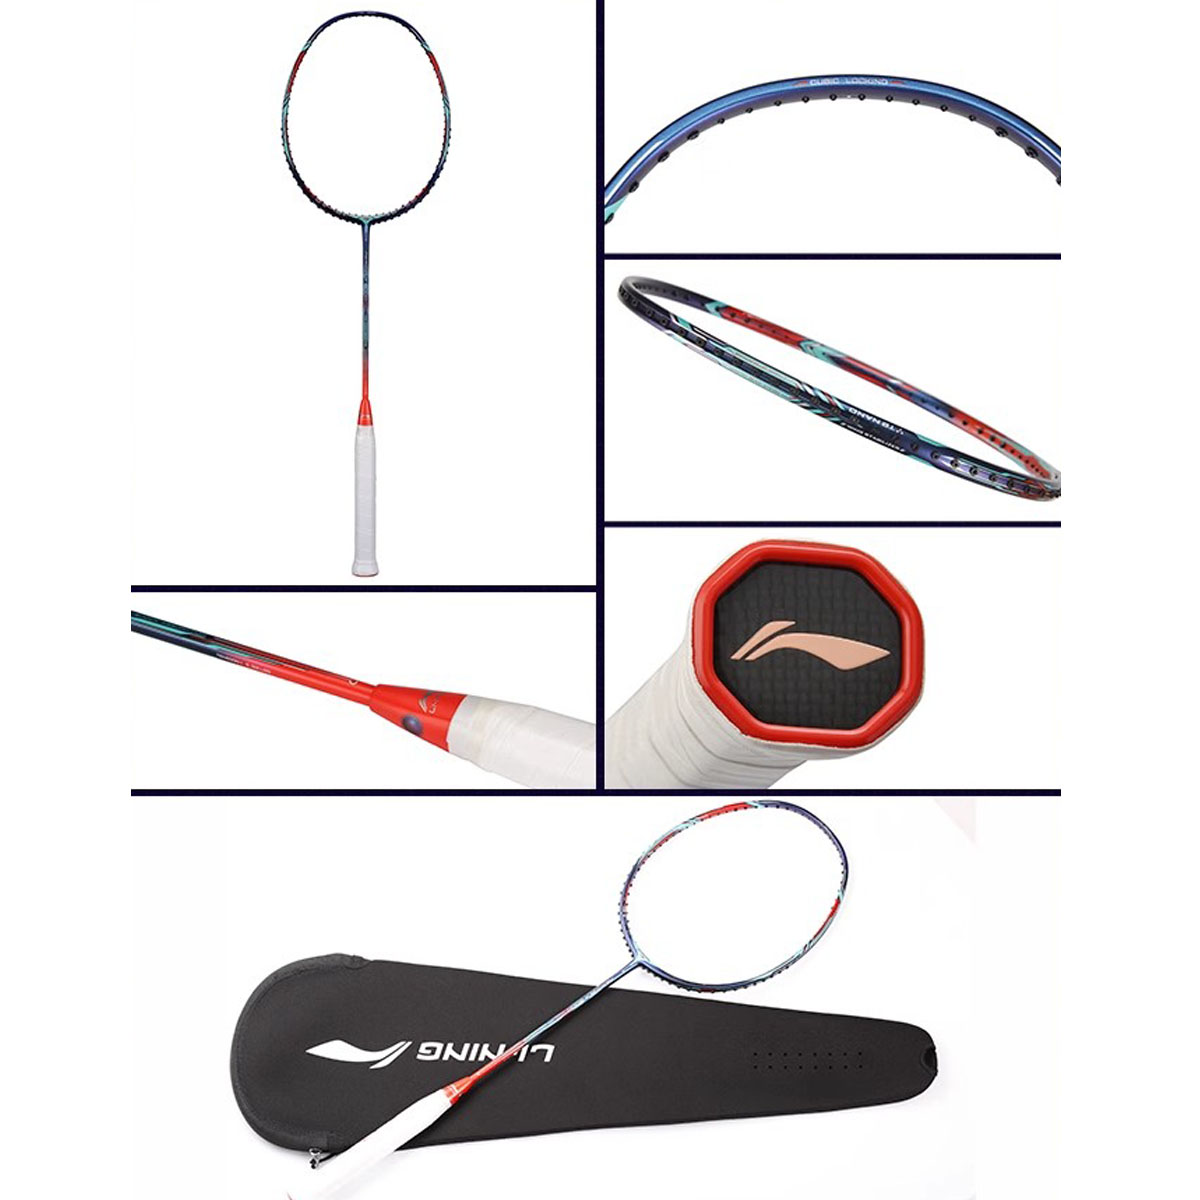 Badminton racket - Training racket -fengdong9000-9000c-9000d- 9000i - 9000Olympic Commemoration - All carbon ultra light carbon fiber